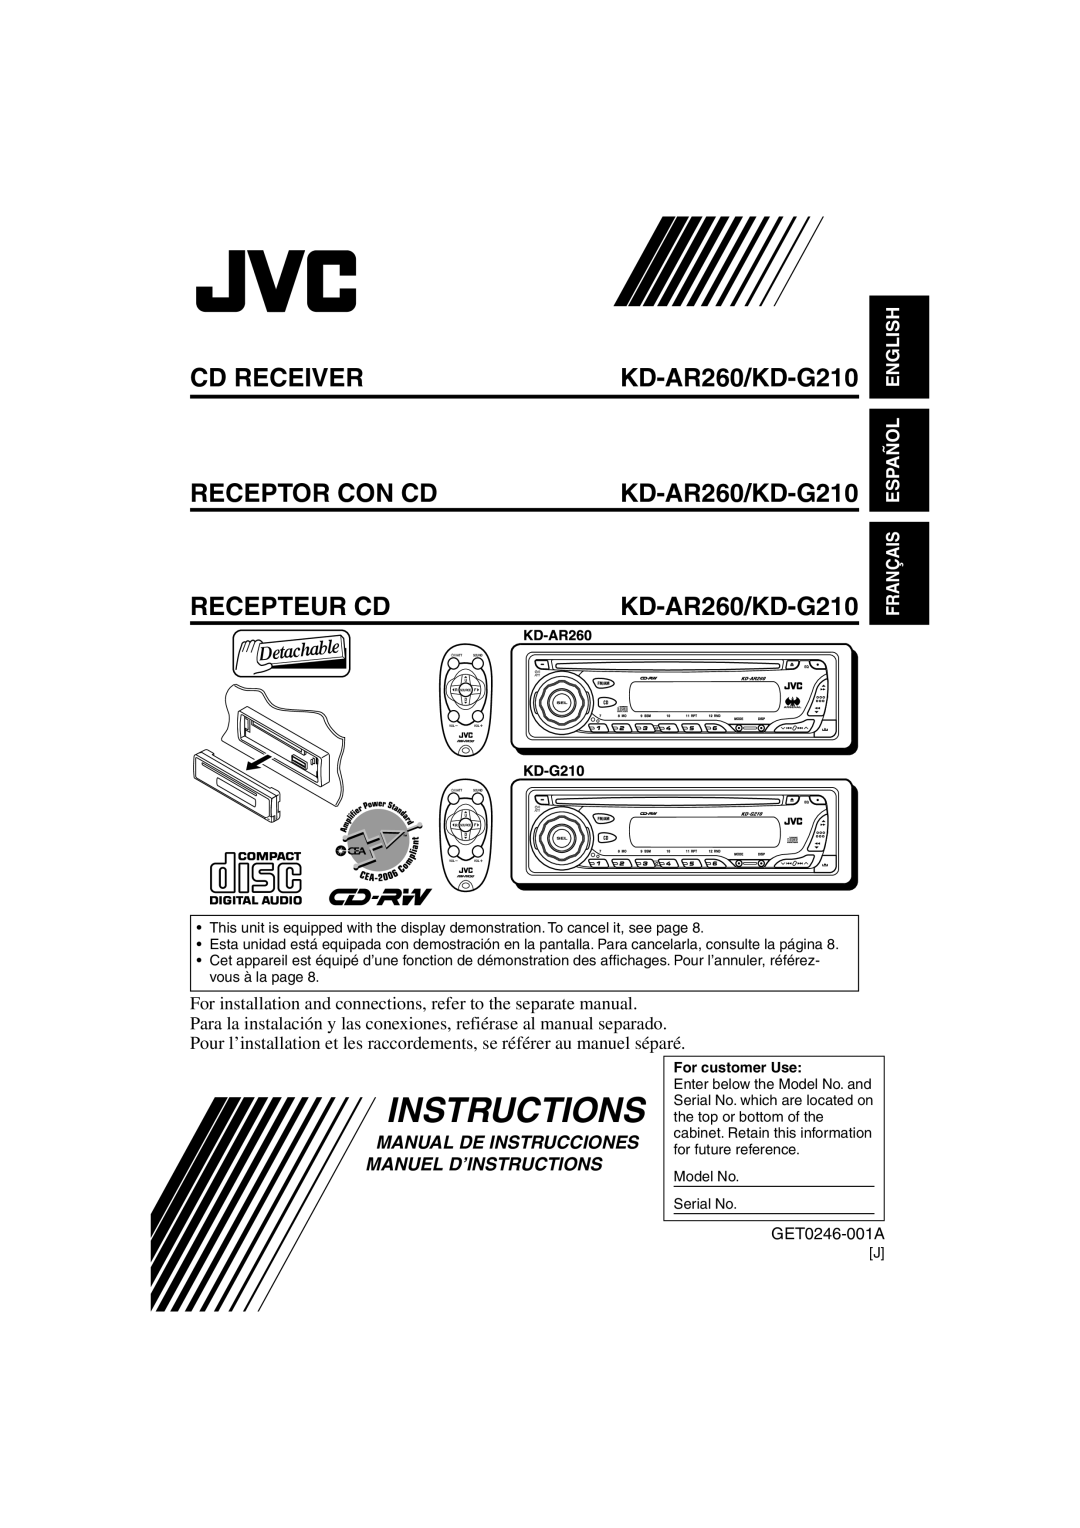 JVC manual Cd Receiver Receptor Con Cd Recepteur Cd, KD-AR260/KD-G210 KD-AR260/KD-G210, English Español, Instructions 